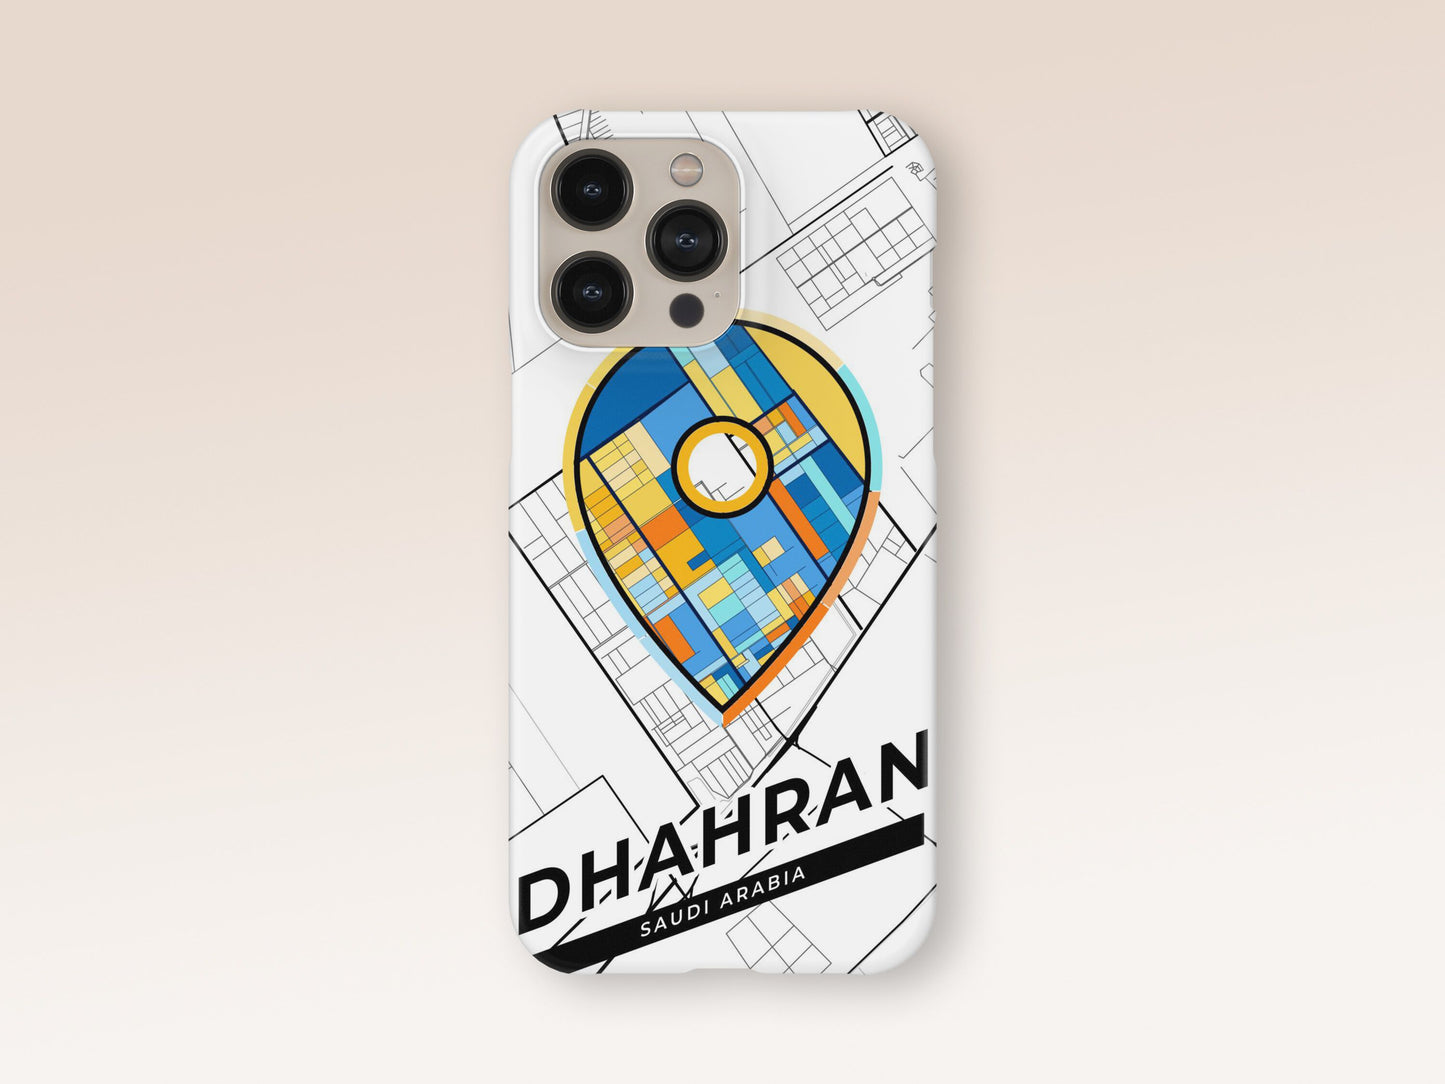 Dhahran Saudi Arabia slim phone case with colorful icon. Birthday, wedding or housewarming gift. Couple match cases. 1